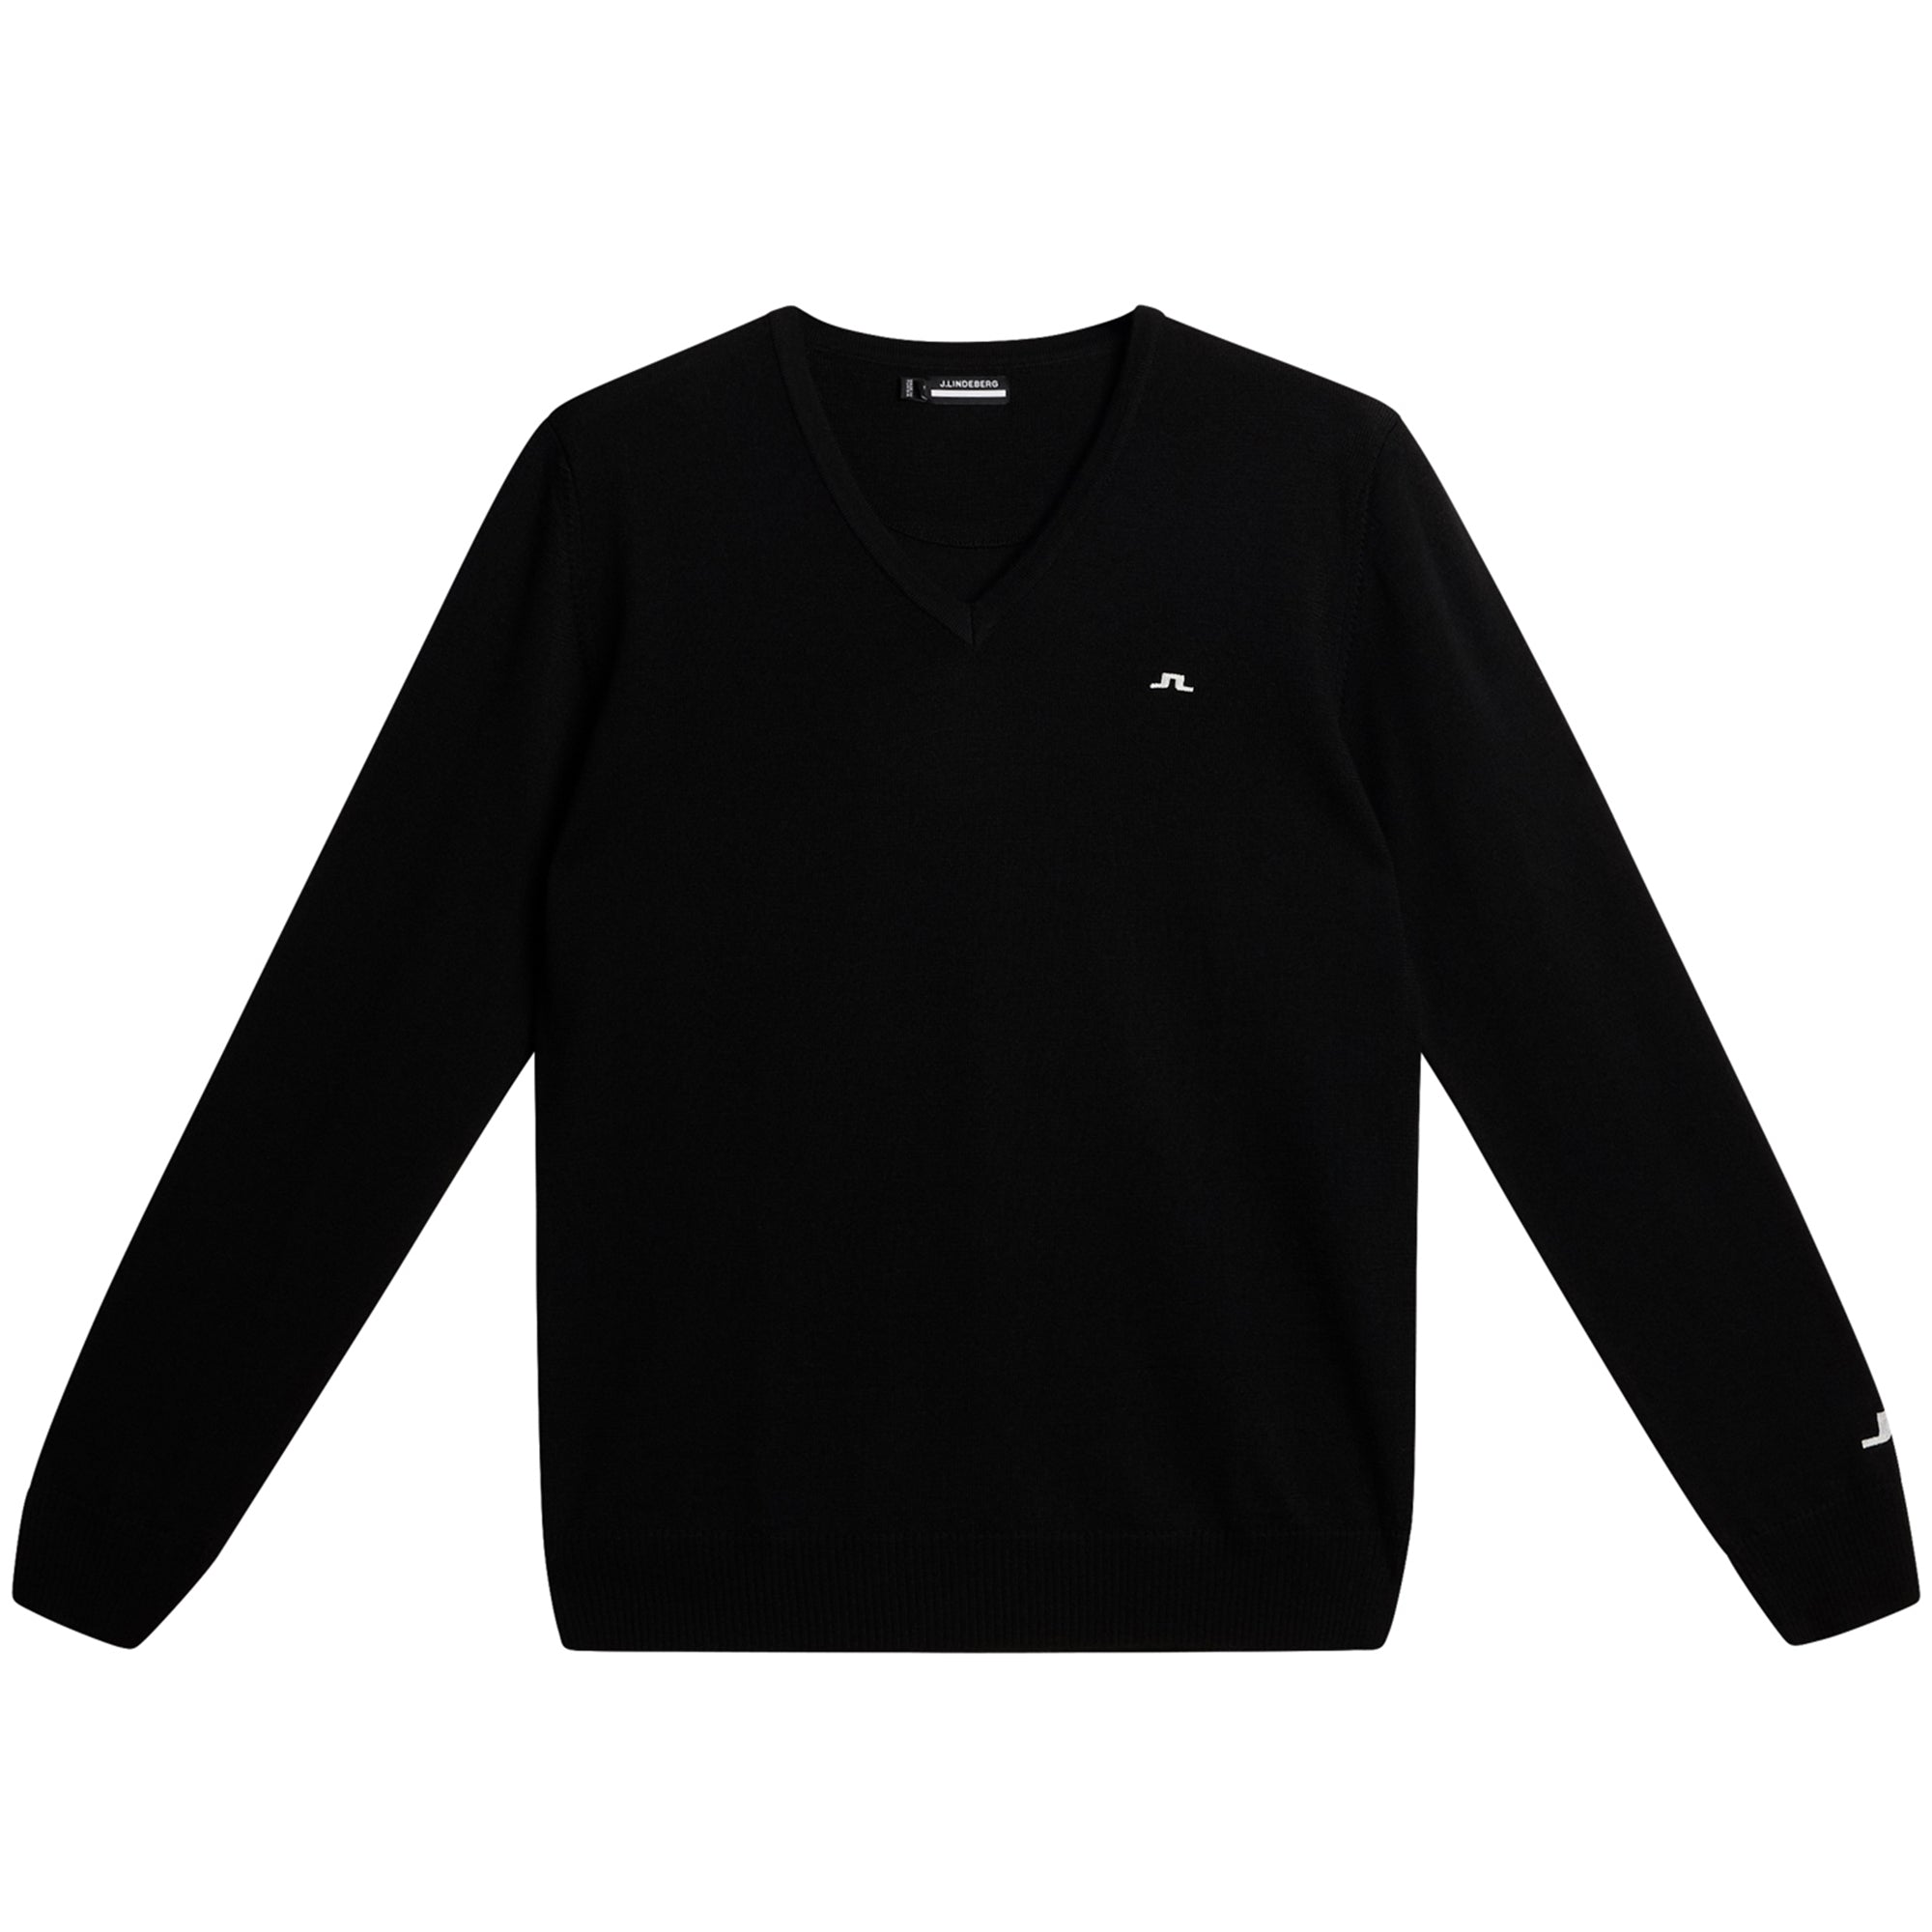 j-lindeberg-golf-lymann-tour-merino-v-neck-sweater-gmkw08835-9999-black